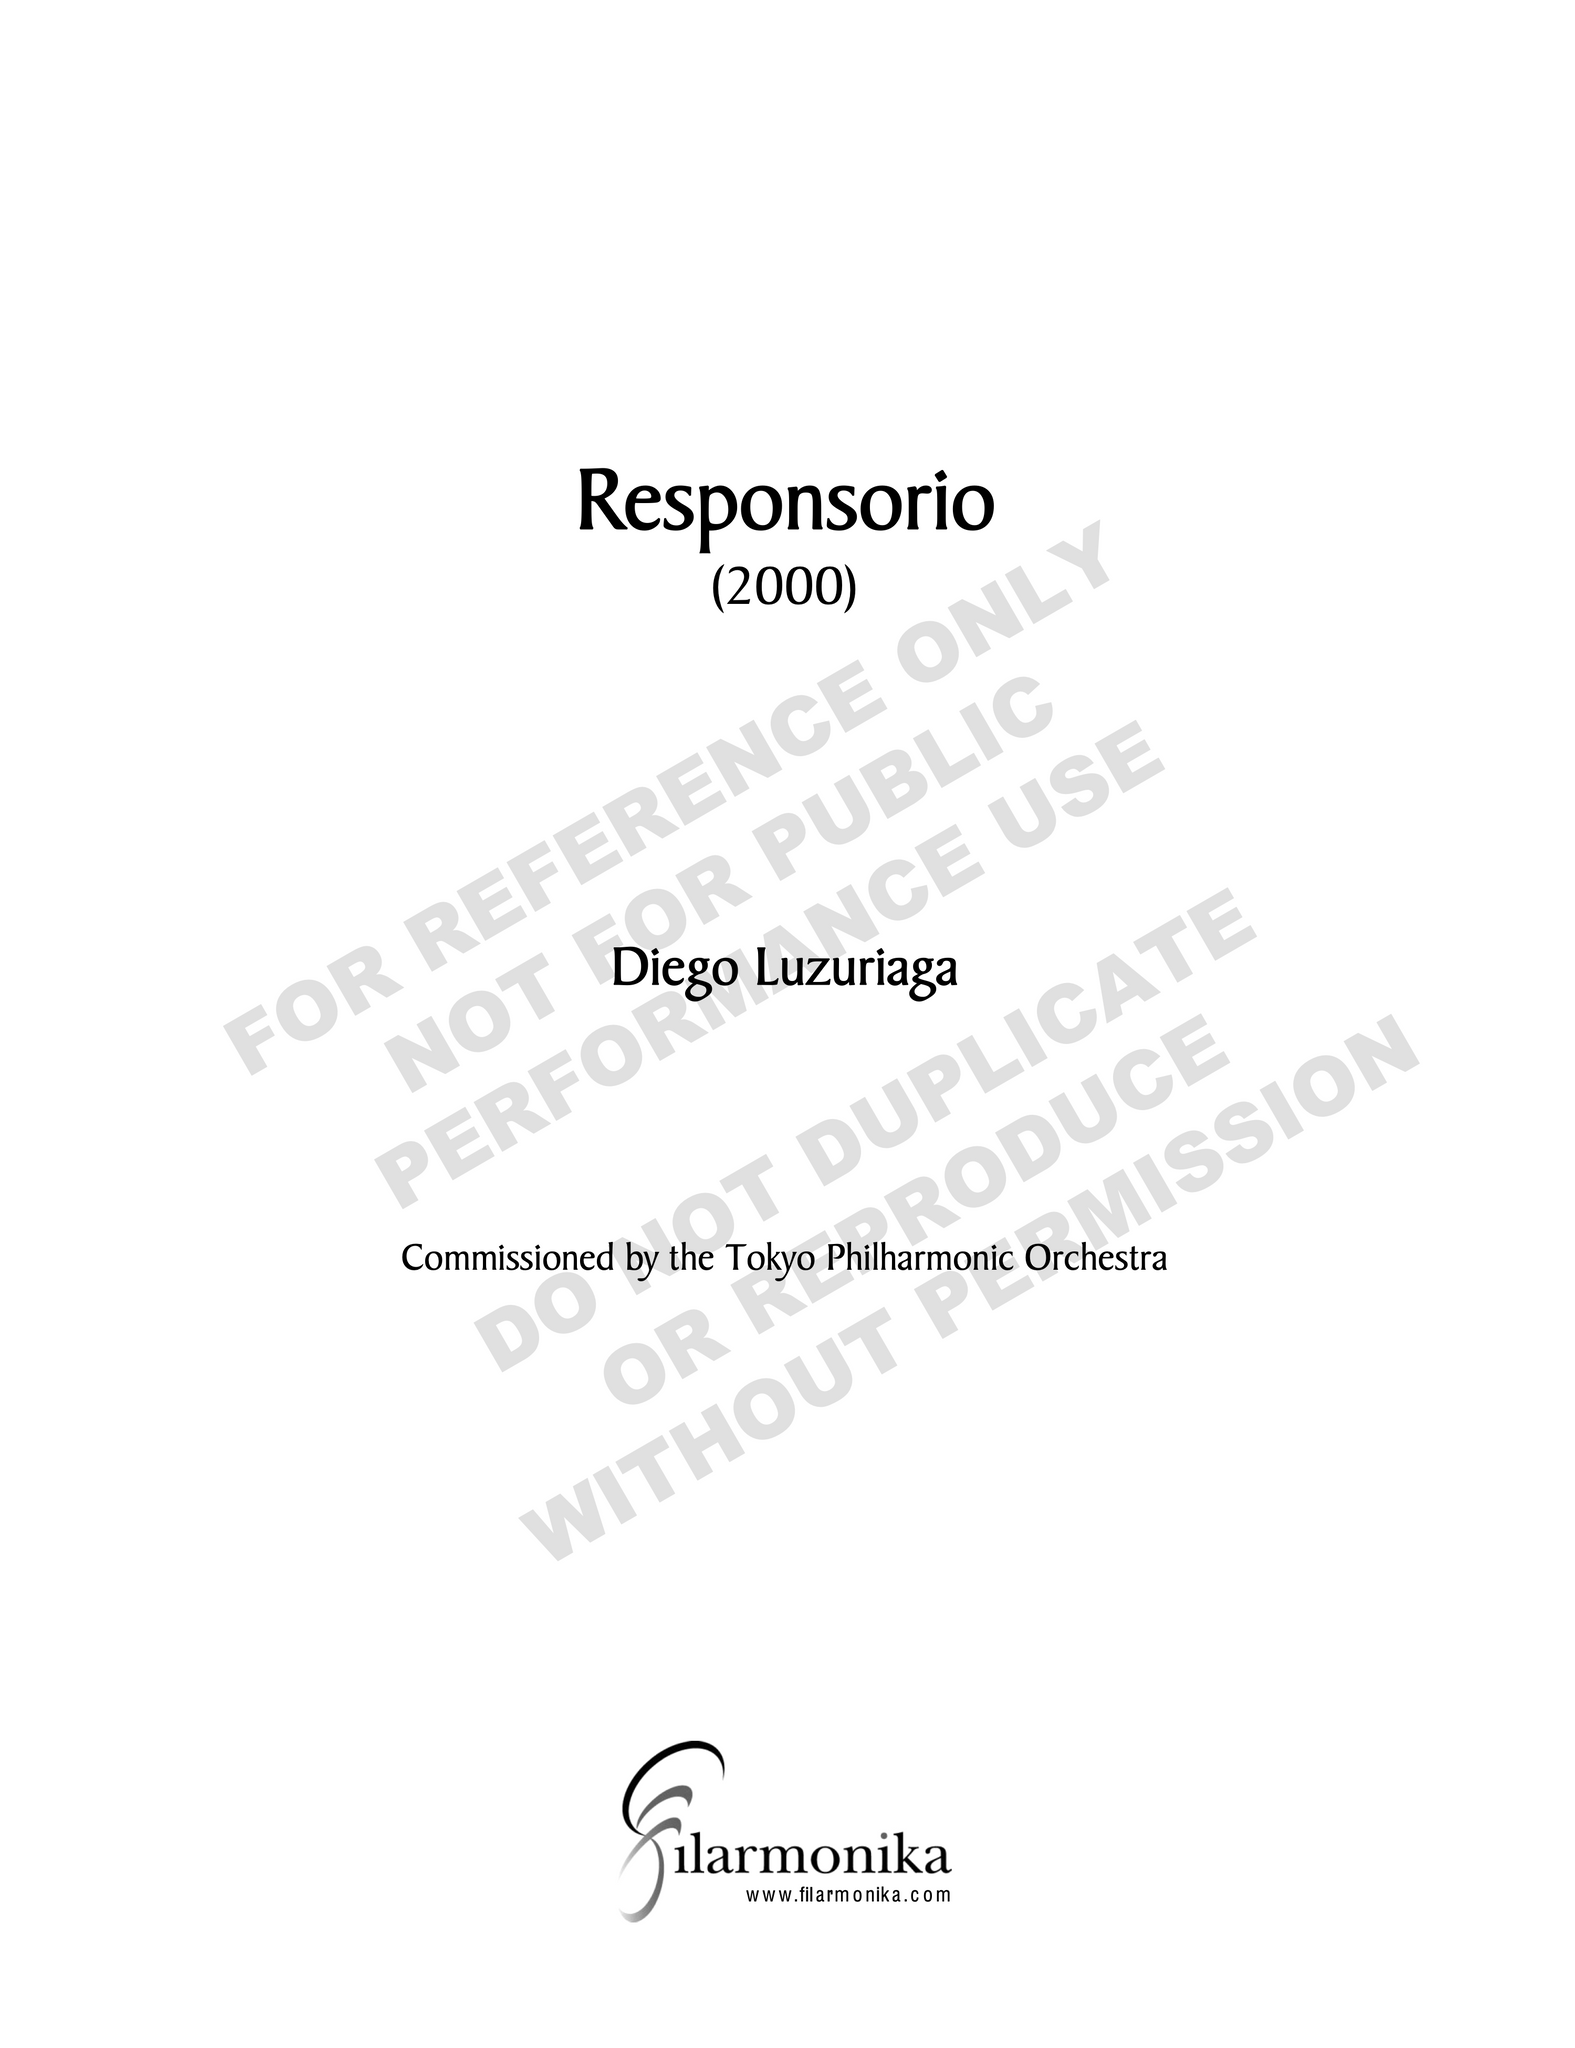 Responsorio, for orchestra